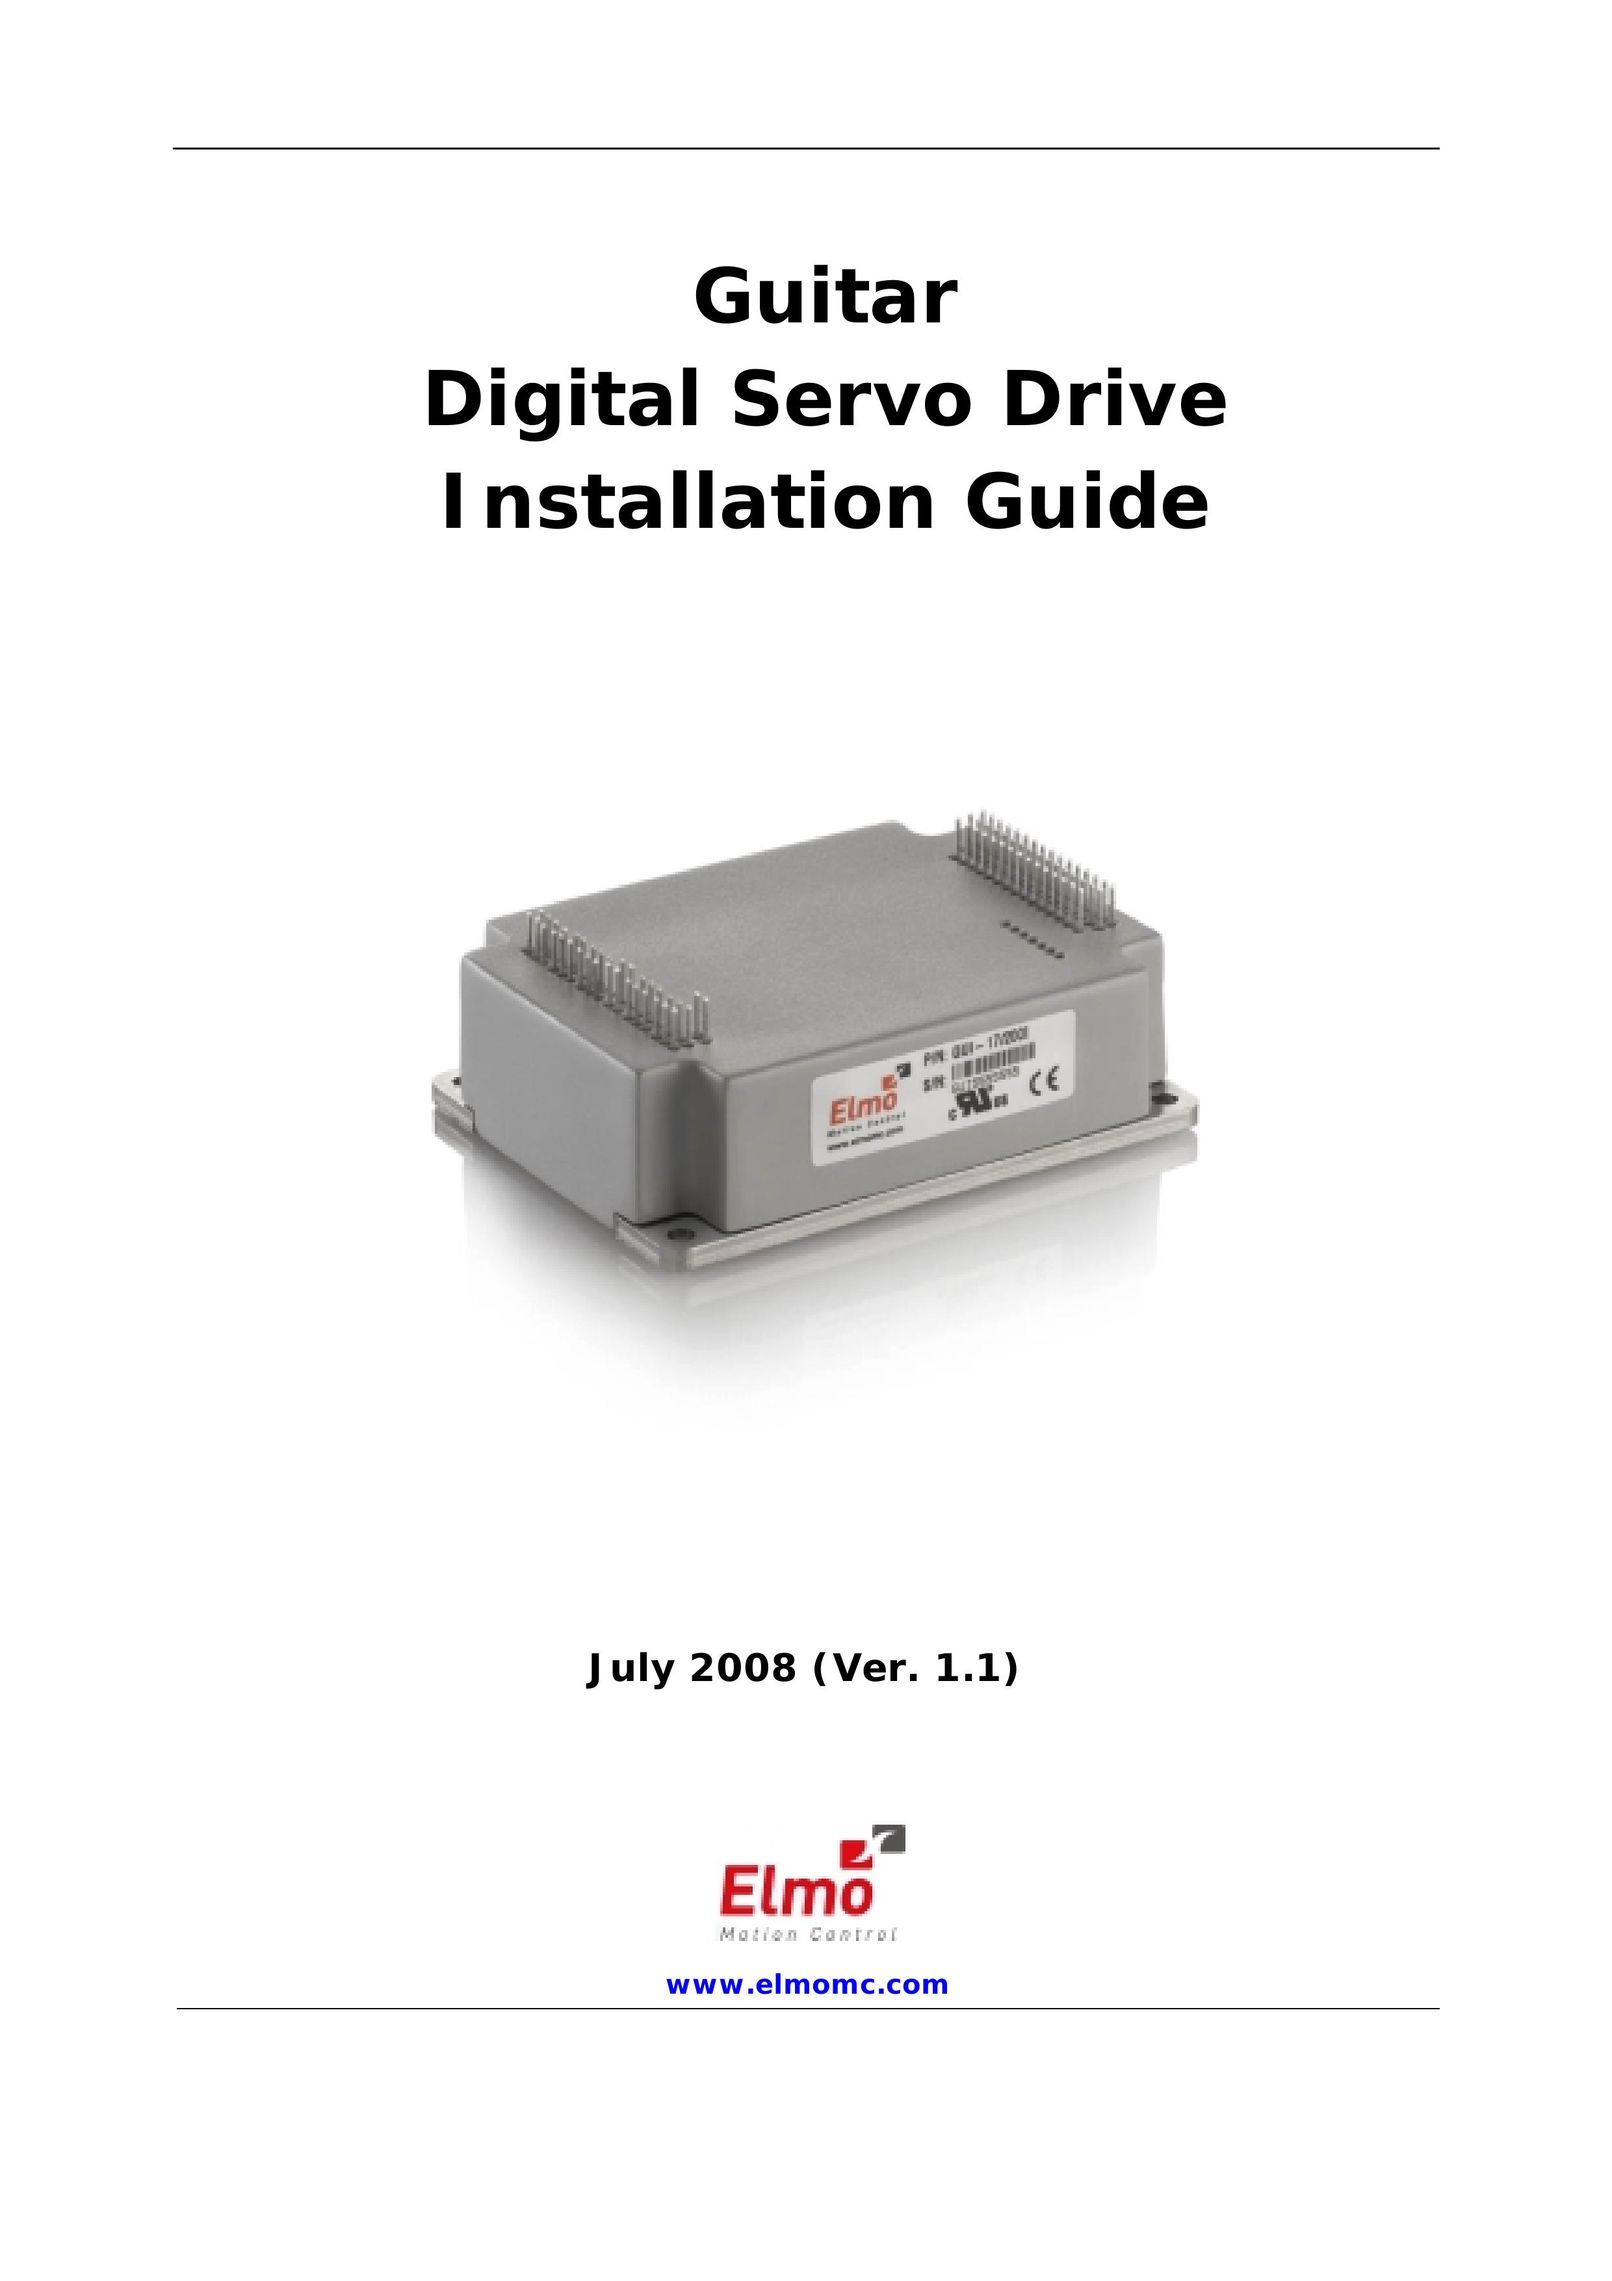 Elmo Guitar Digital Servo Drive Computer Hardware User Manual